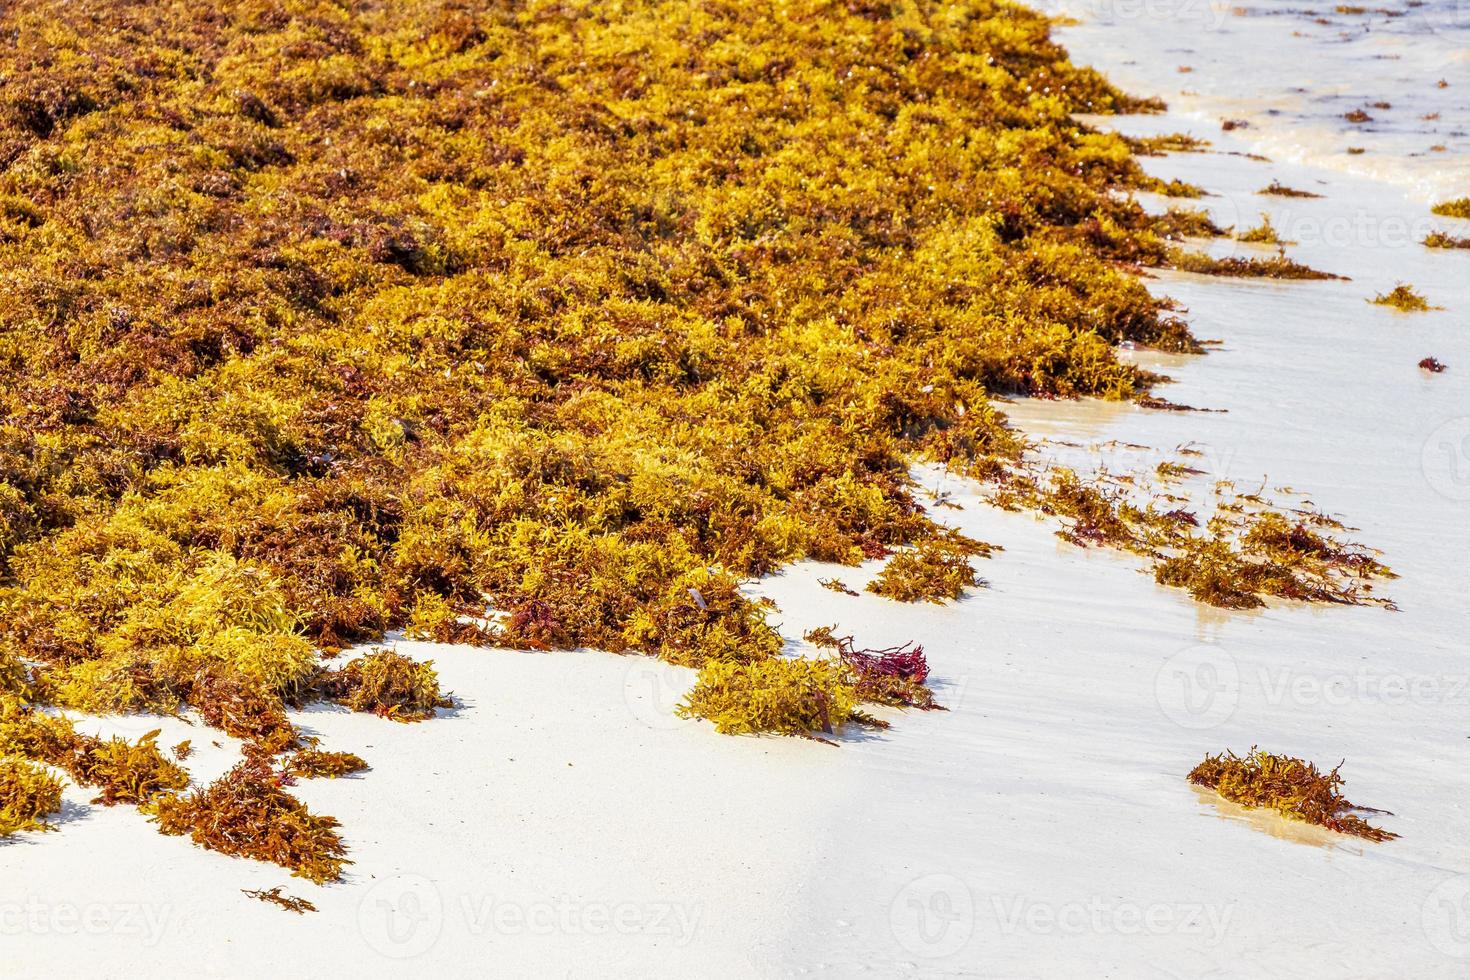 zeer walgelijk rood zeewier sargazo strand playa del carmen mexico. foto